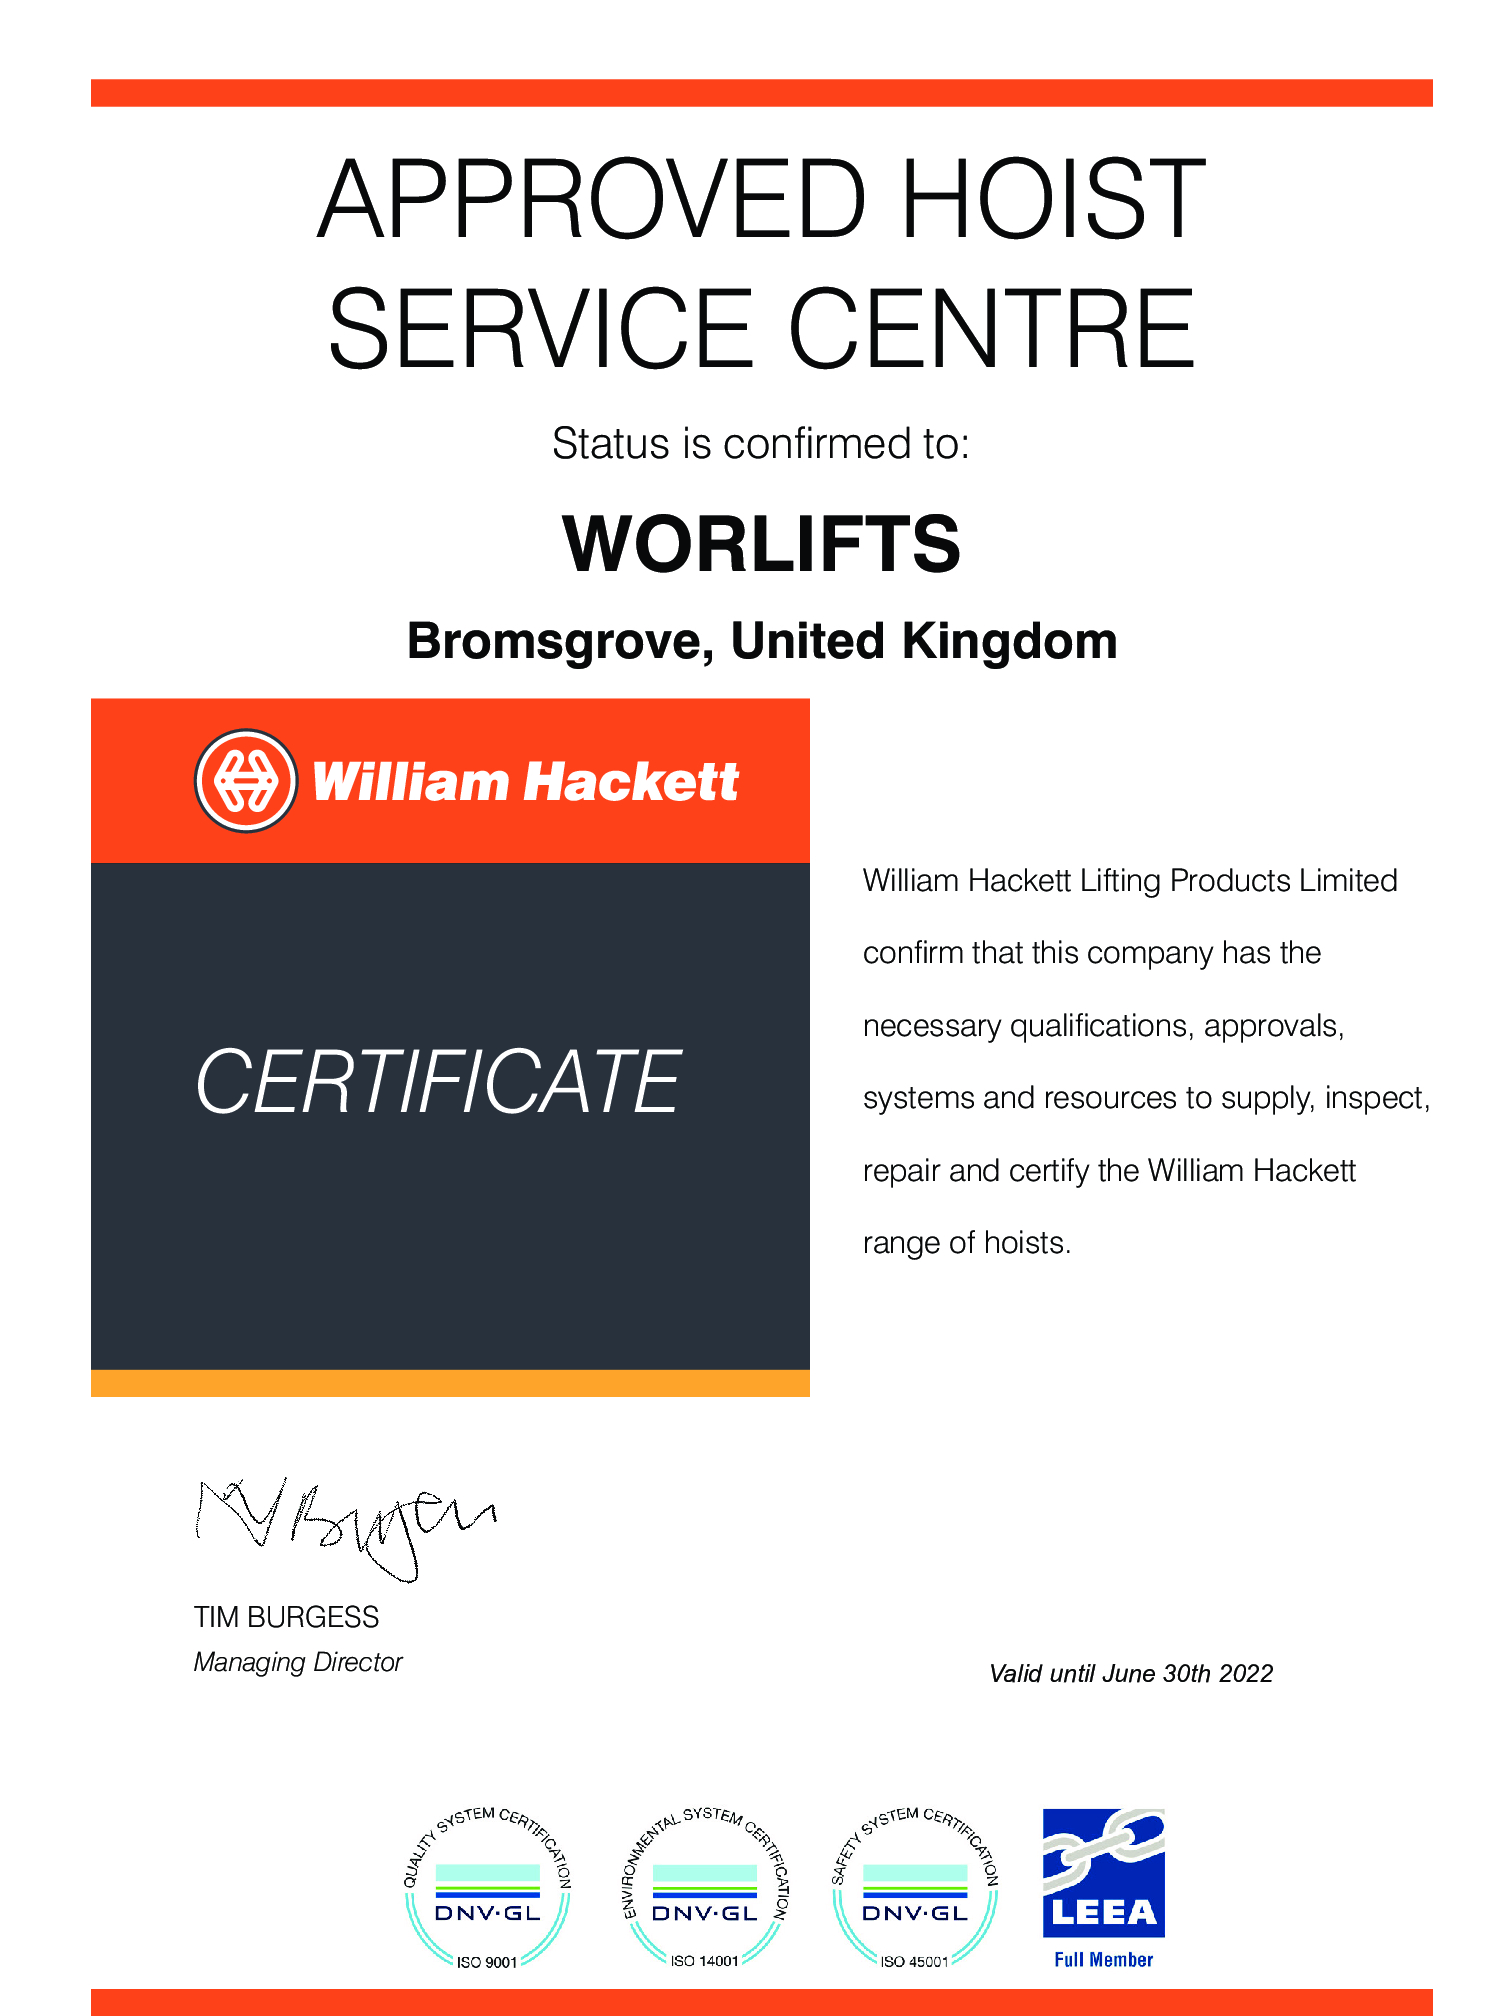 W.Hackett Approved Hoist Service Centre Expiry 30.06.22 pdf